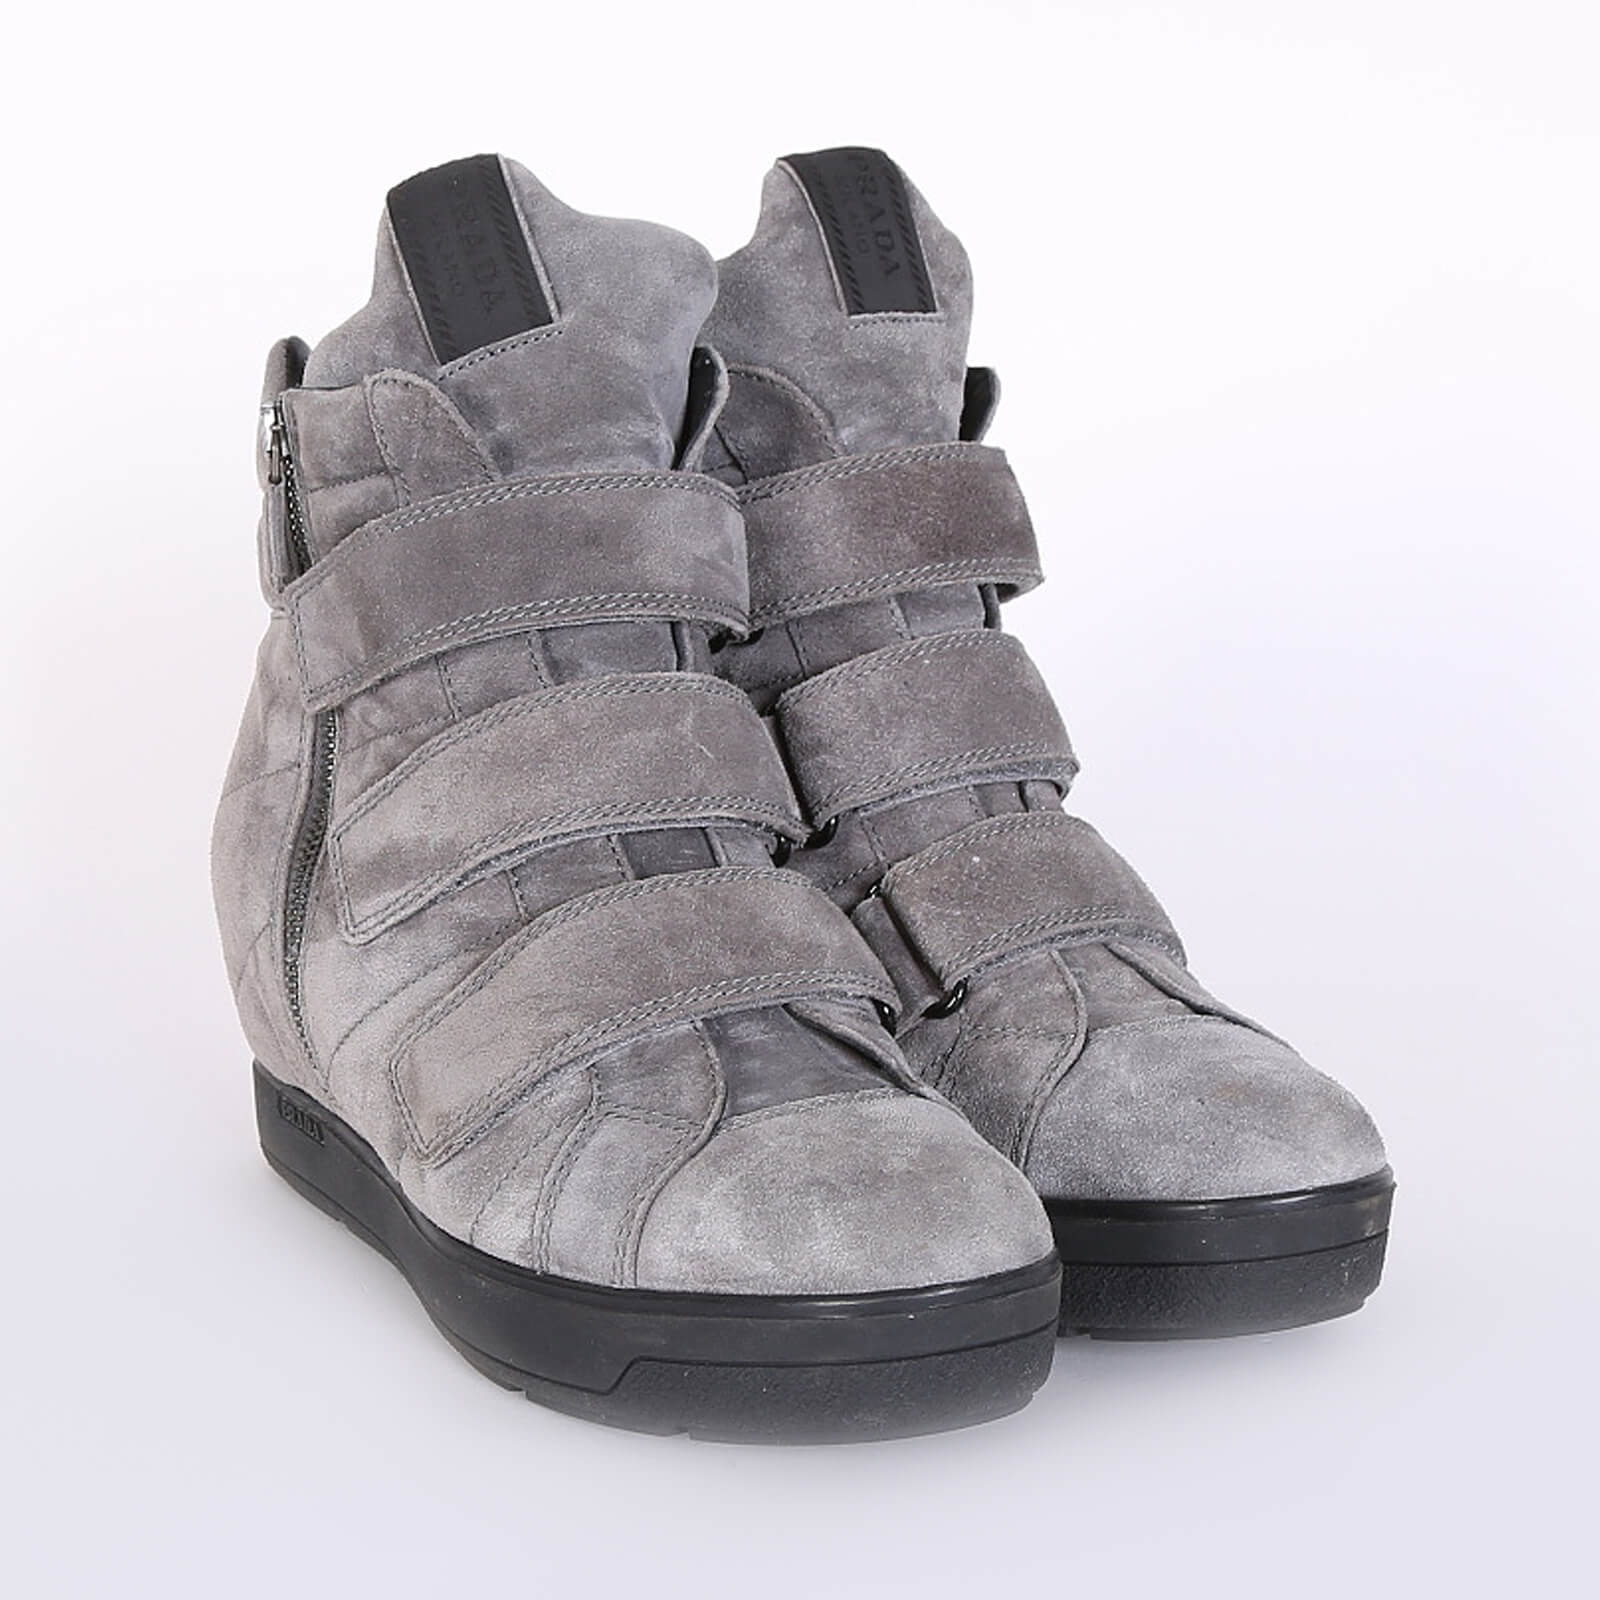 Prada - Velcro Suede Leather Wedge Sneakers Grey 40 